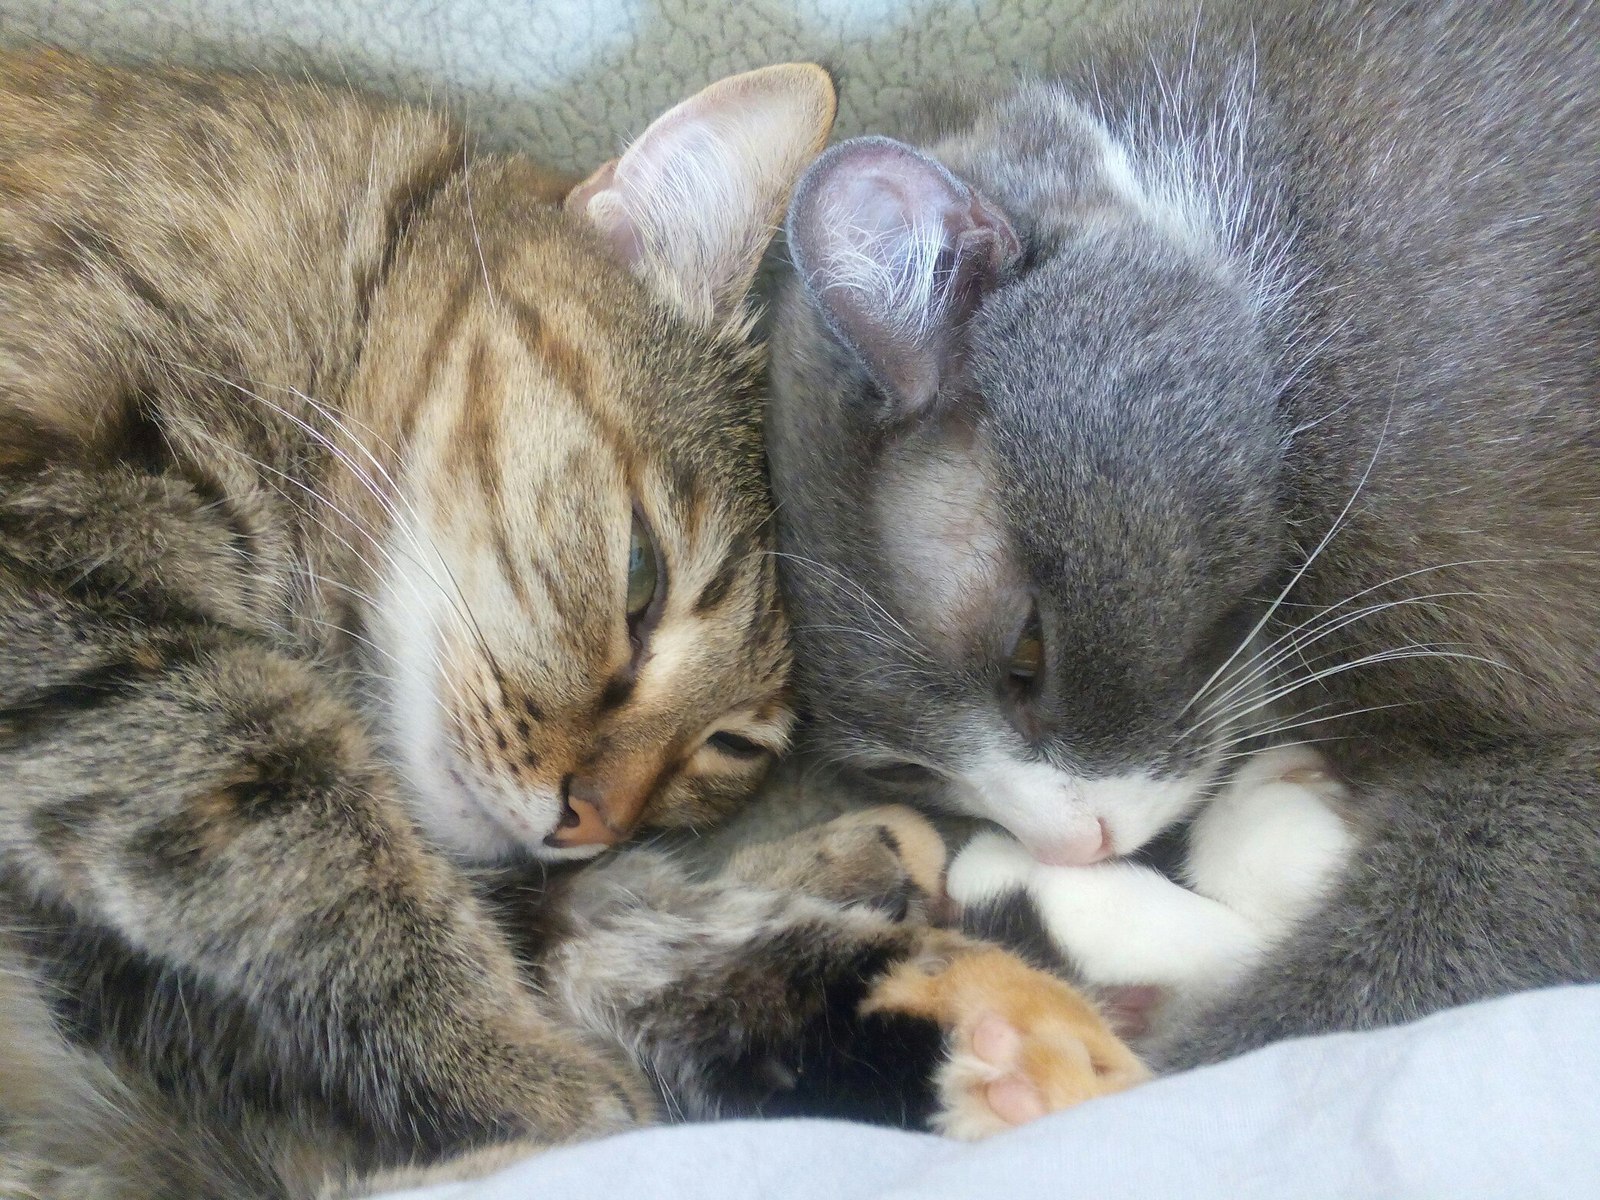 Звук мамы кошки зовущей. Мама кошка и котенок. Мама кошка с двумя котятами.